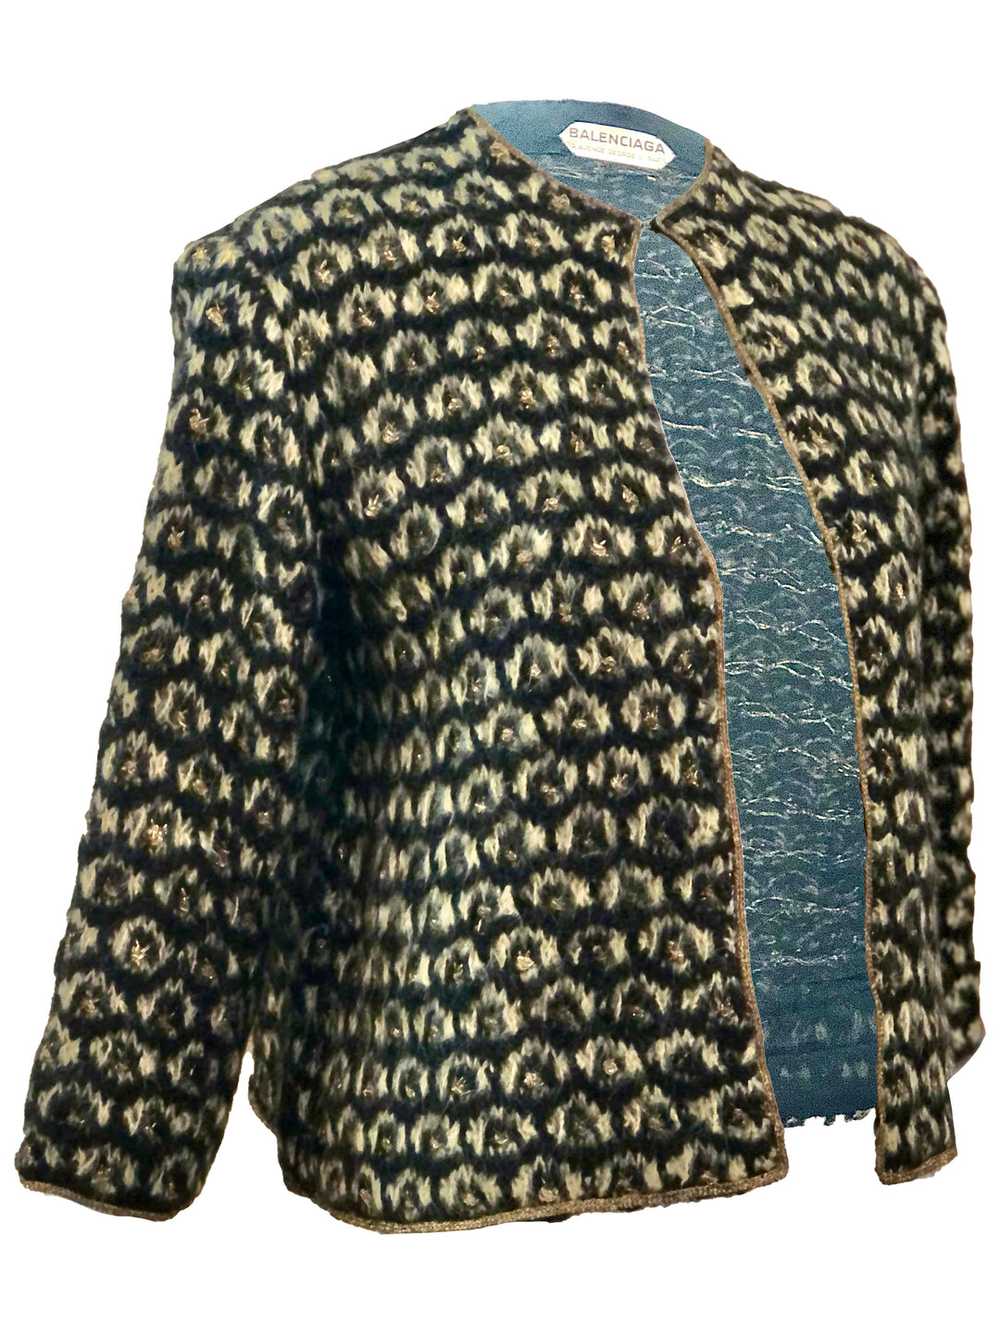 1960s Balenciaga Haute Couture Jacket - image 2